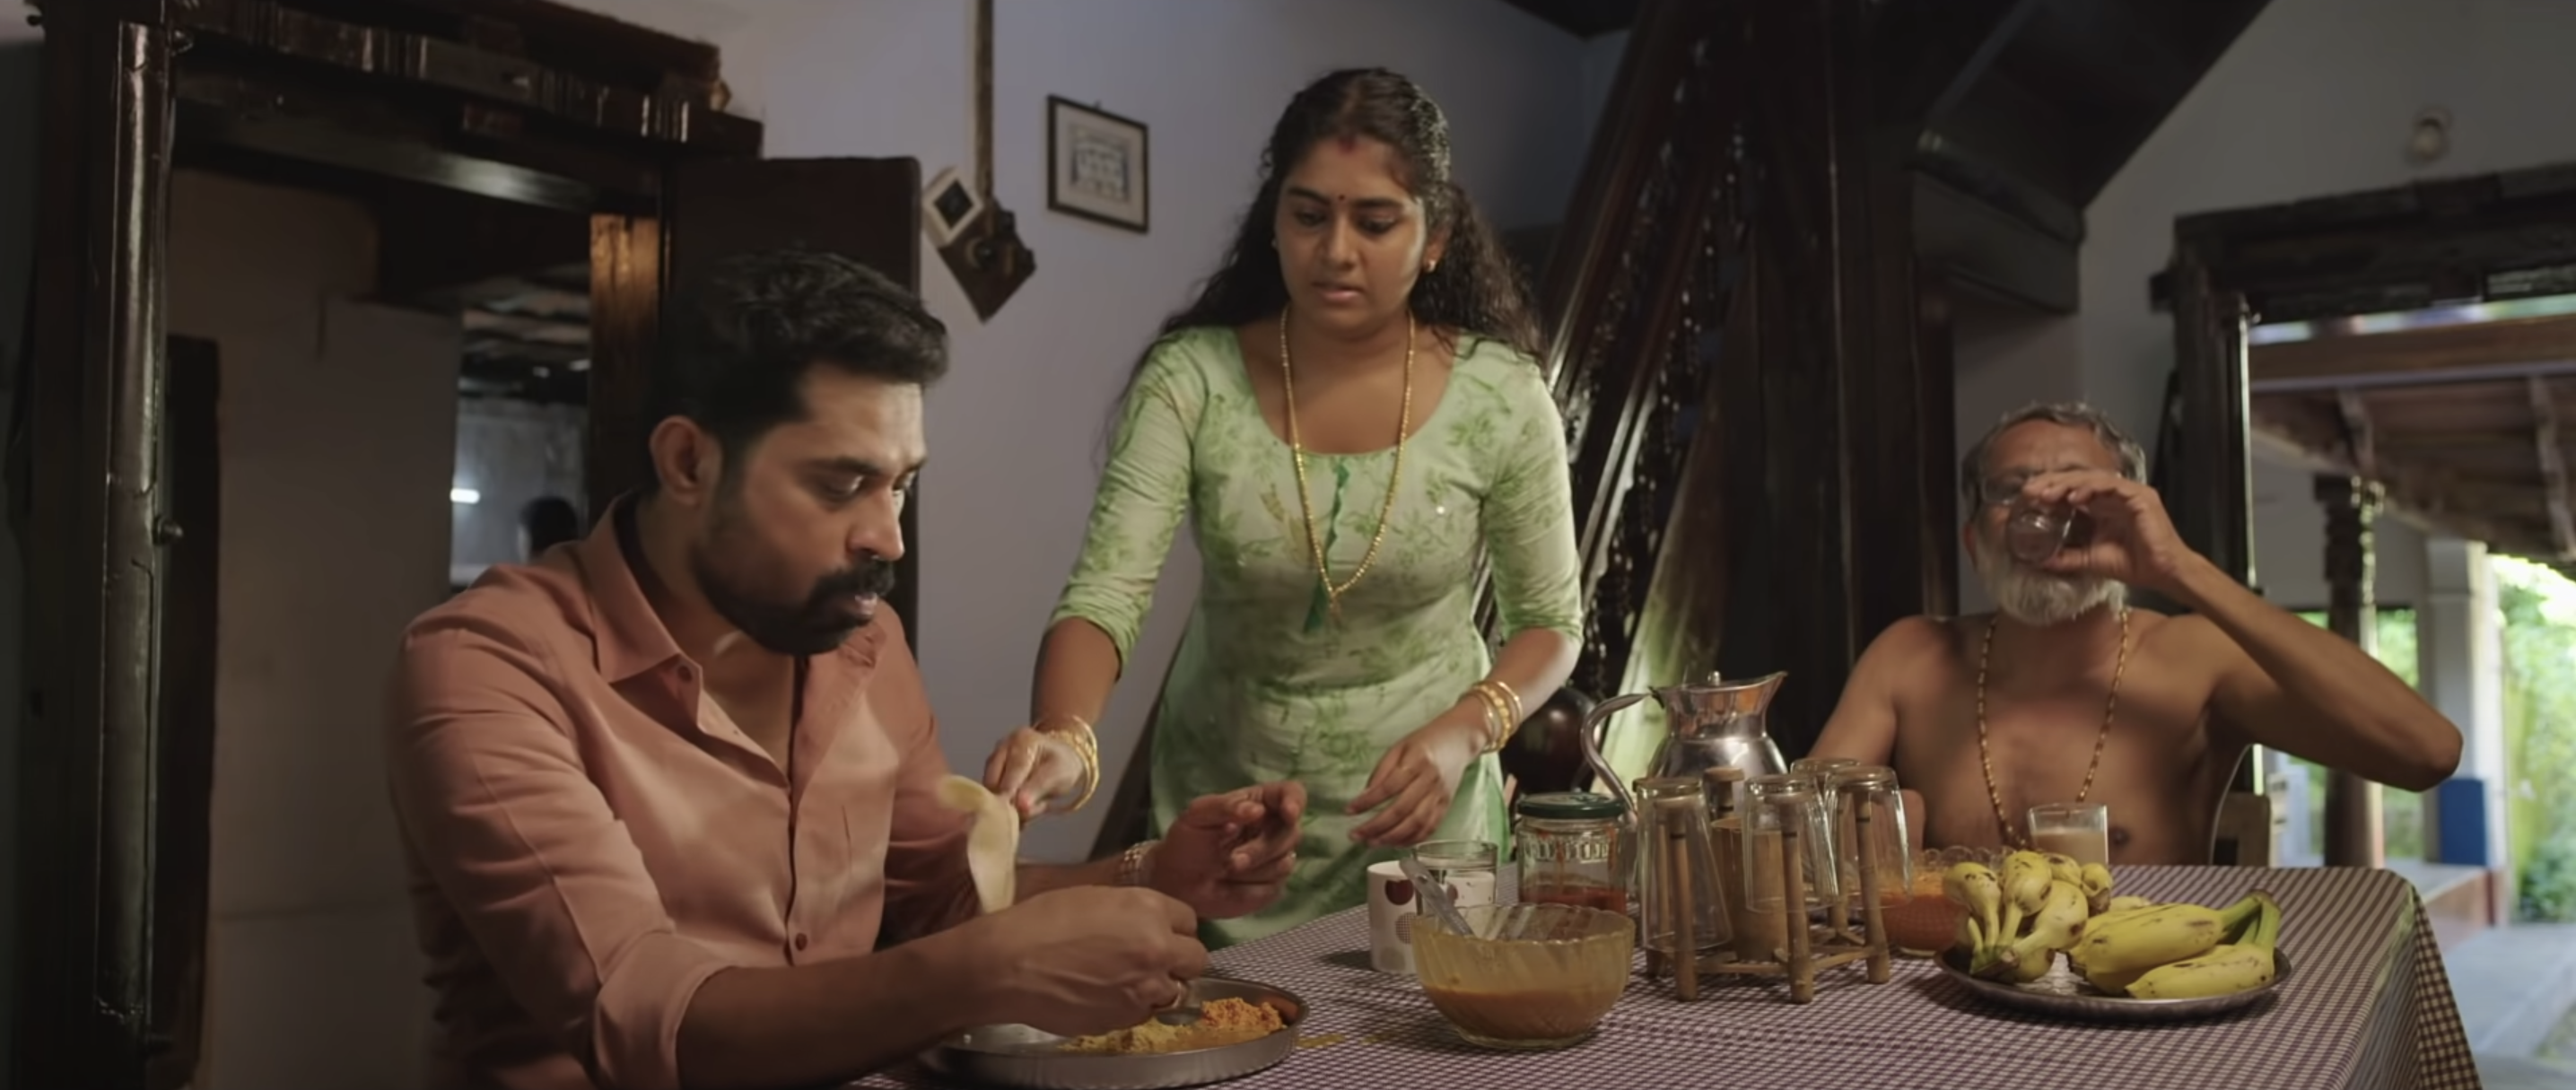 Suraj Venjaramoodu, Nimisha Sajayan, and T. Suresh Babu in 'The Great Indian Kitchen' (Mankind Cinemas/Symmetry Cinemas/Cinema Cooks, 2021)